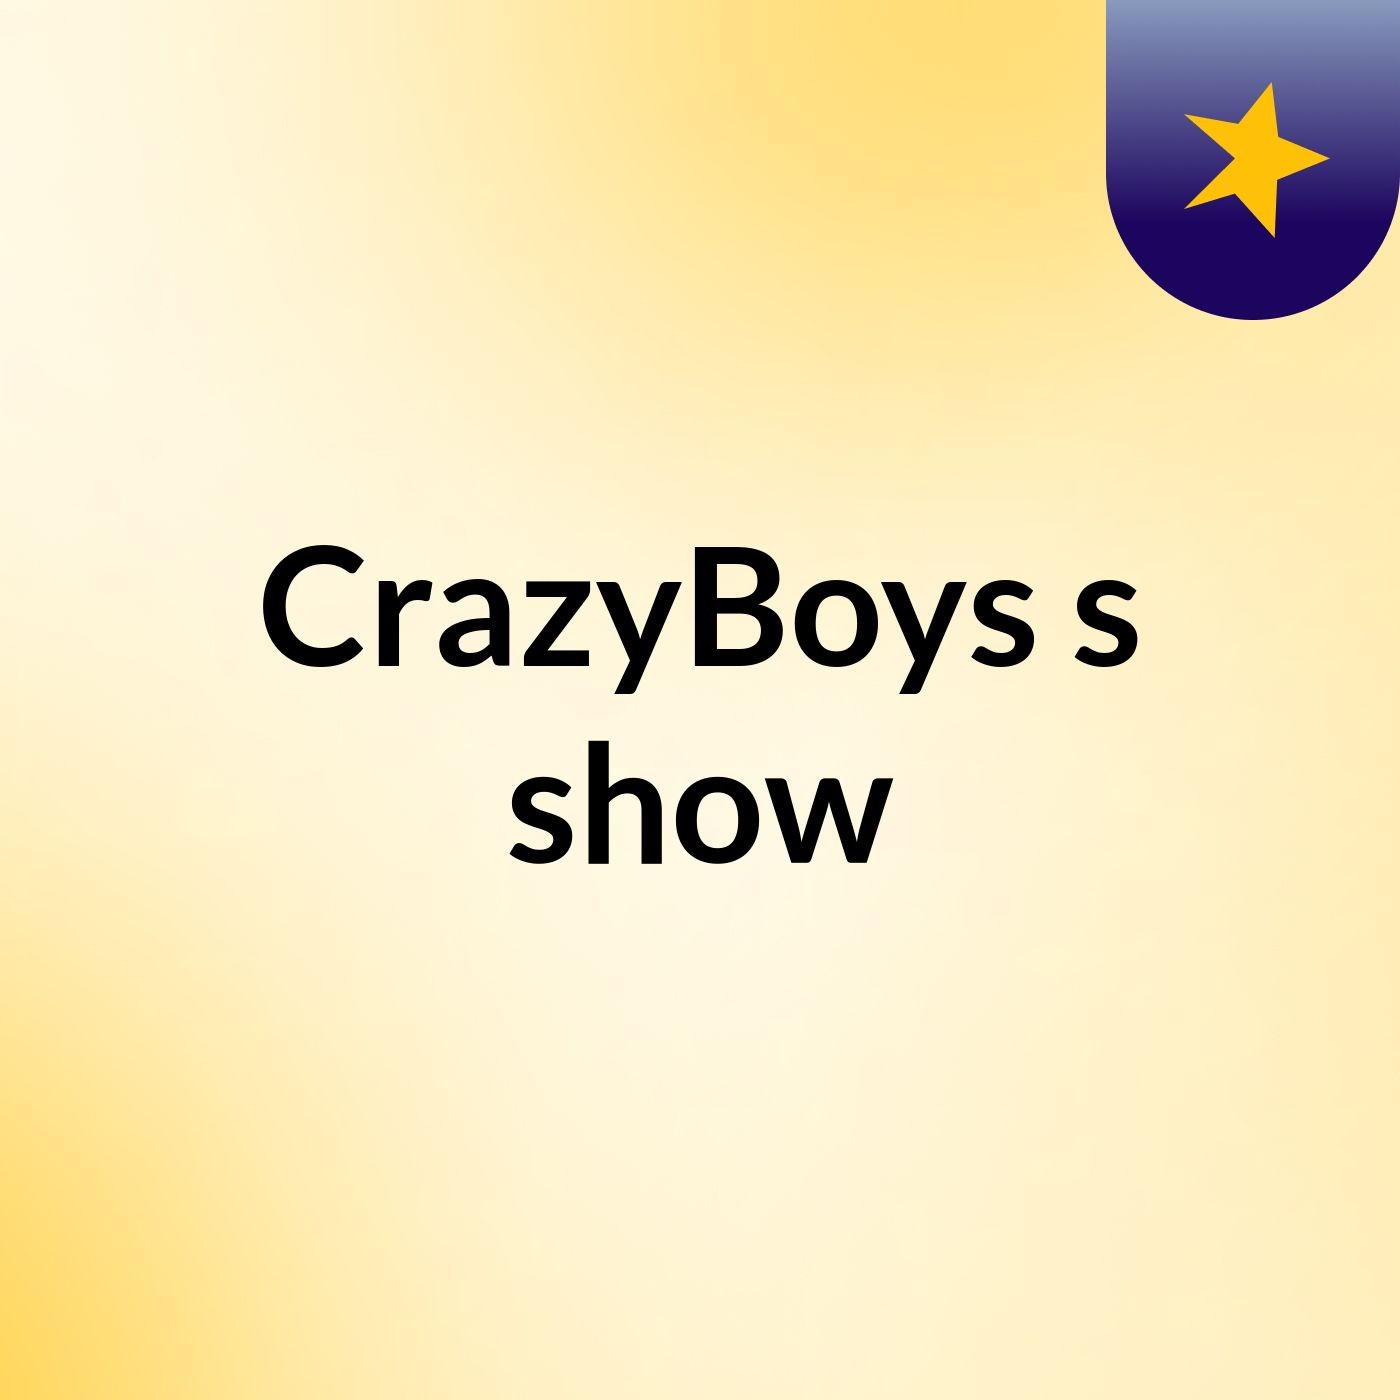 CrazyBoys's show